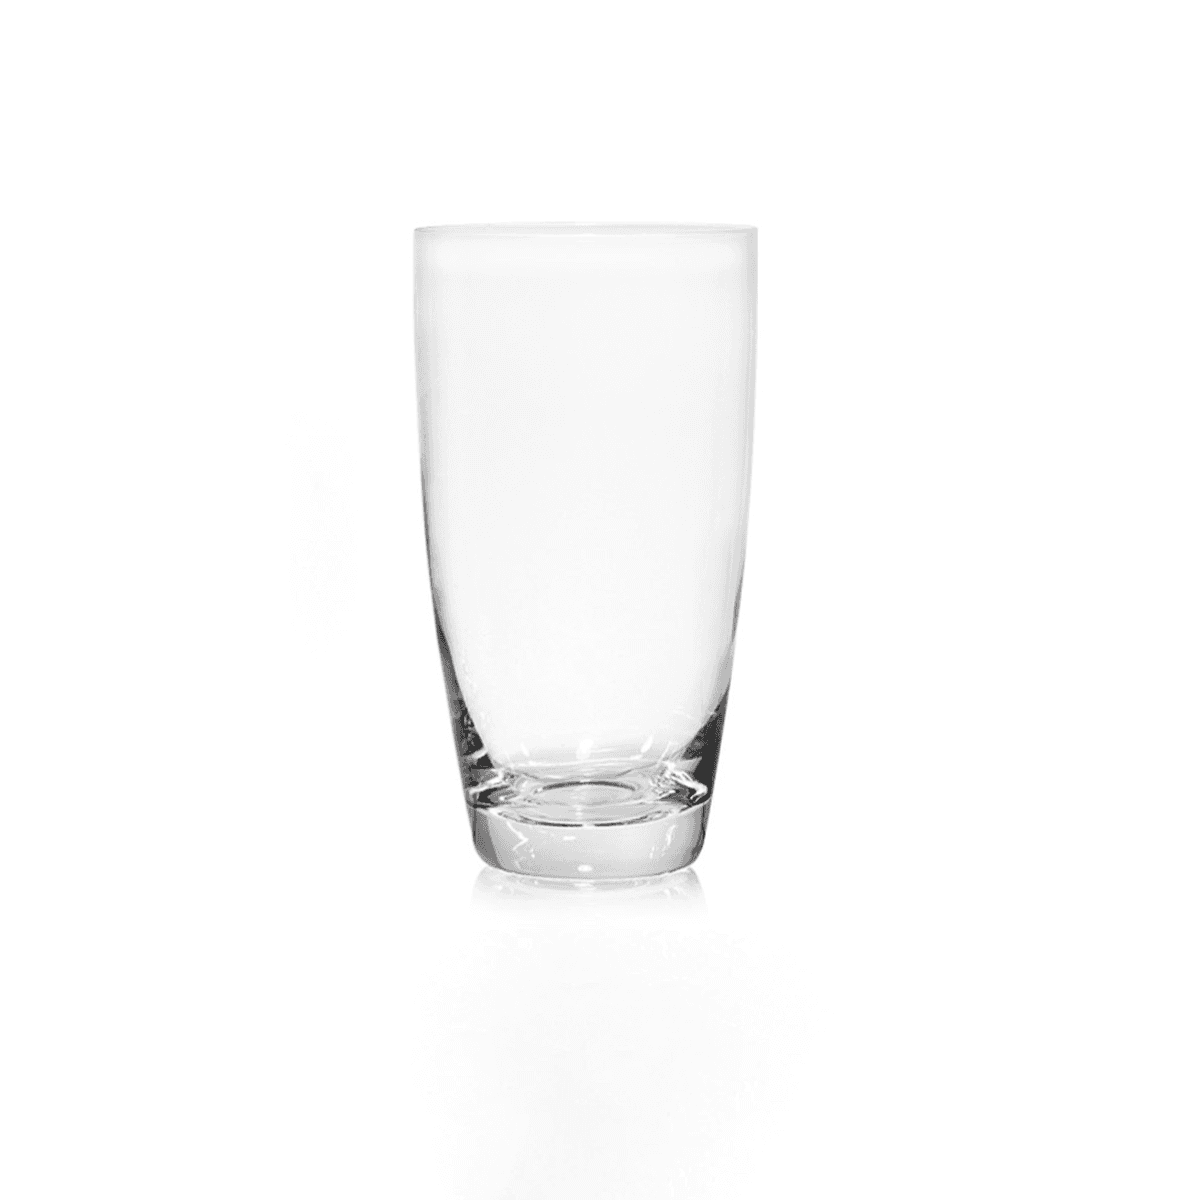 Cerve Glass Domino Tumbler 400 ml Set of 3 Pieces Transparent Glass